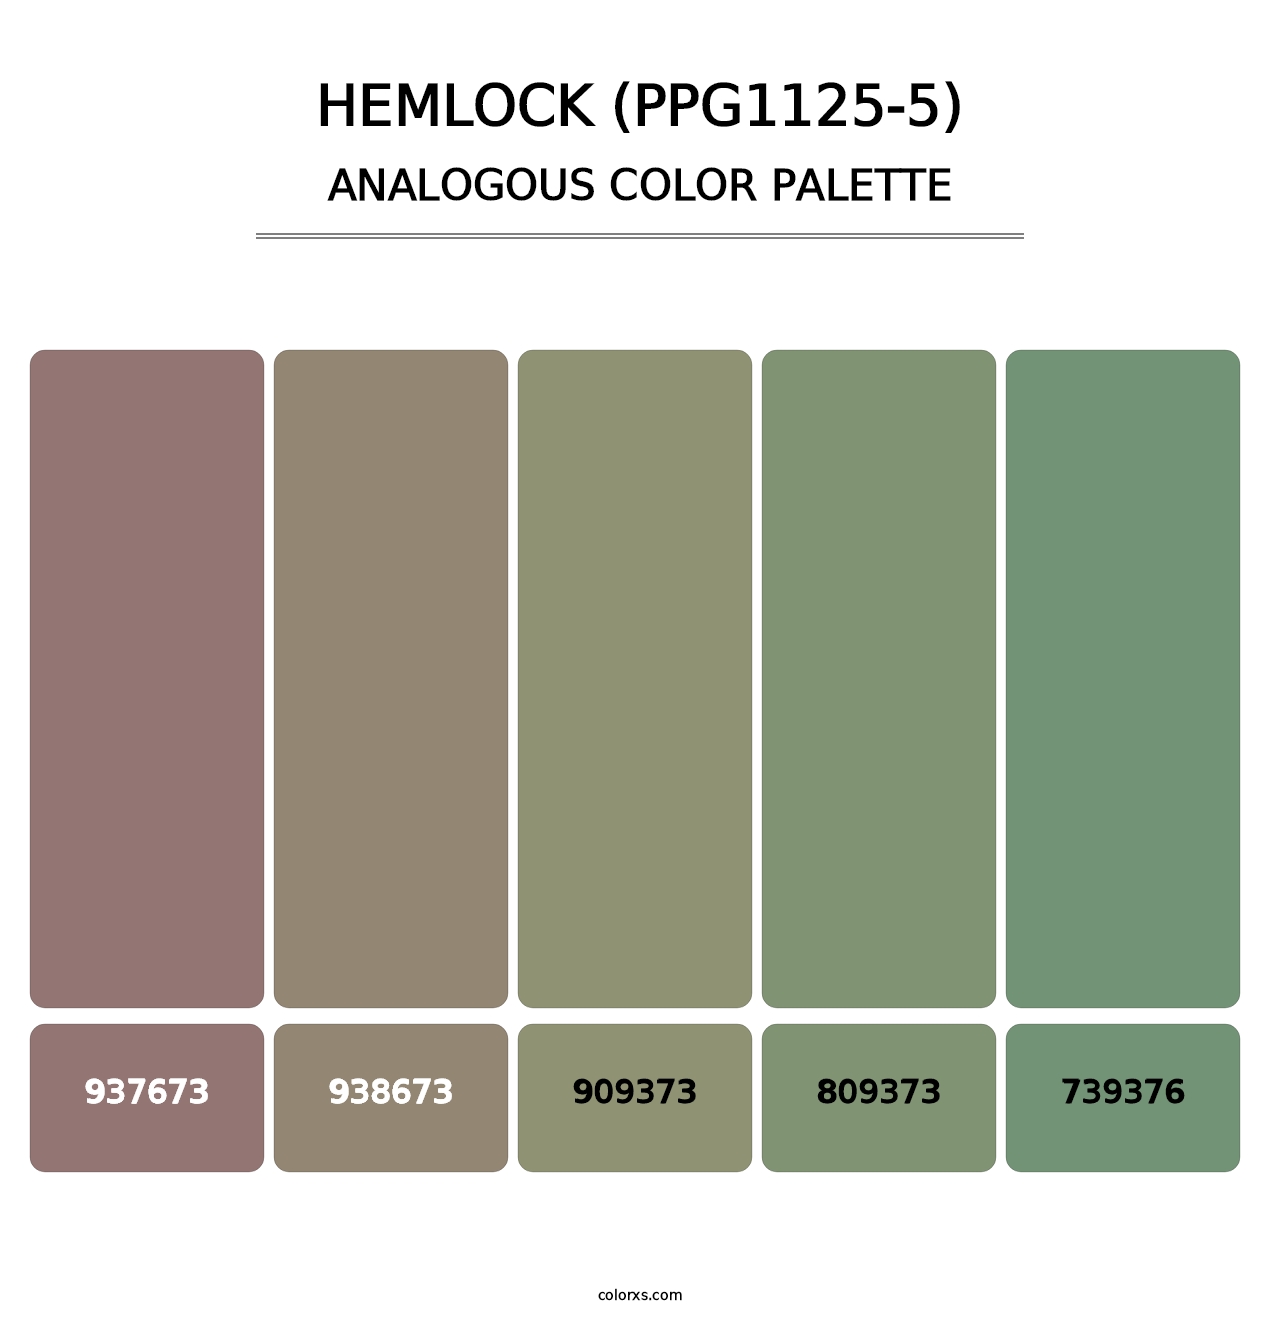 Hemlock (PPG1125-5) - Analogous Color Palette